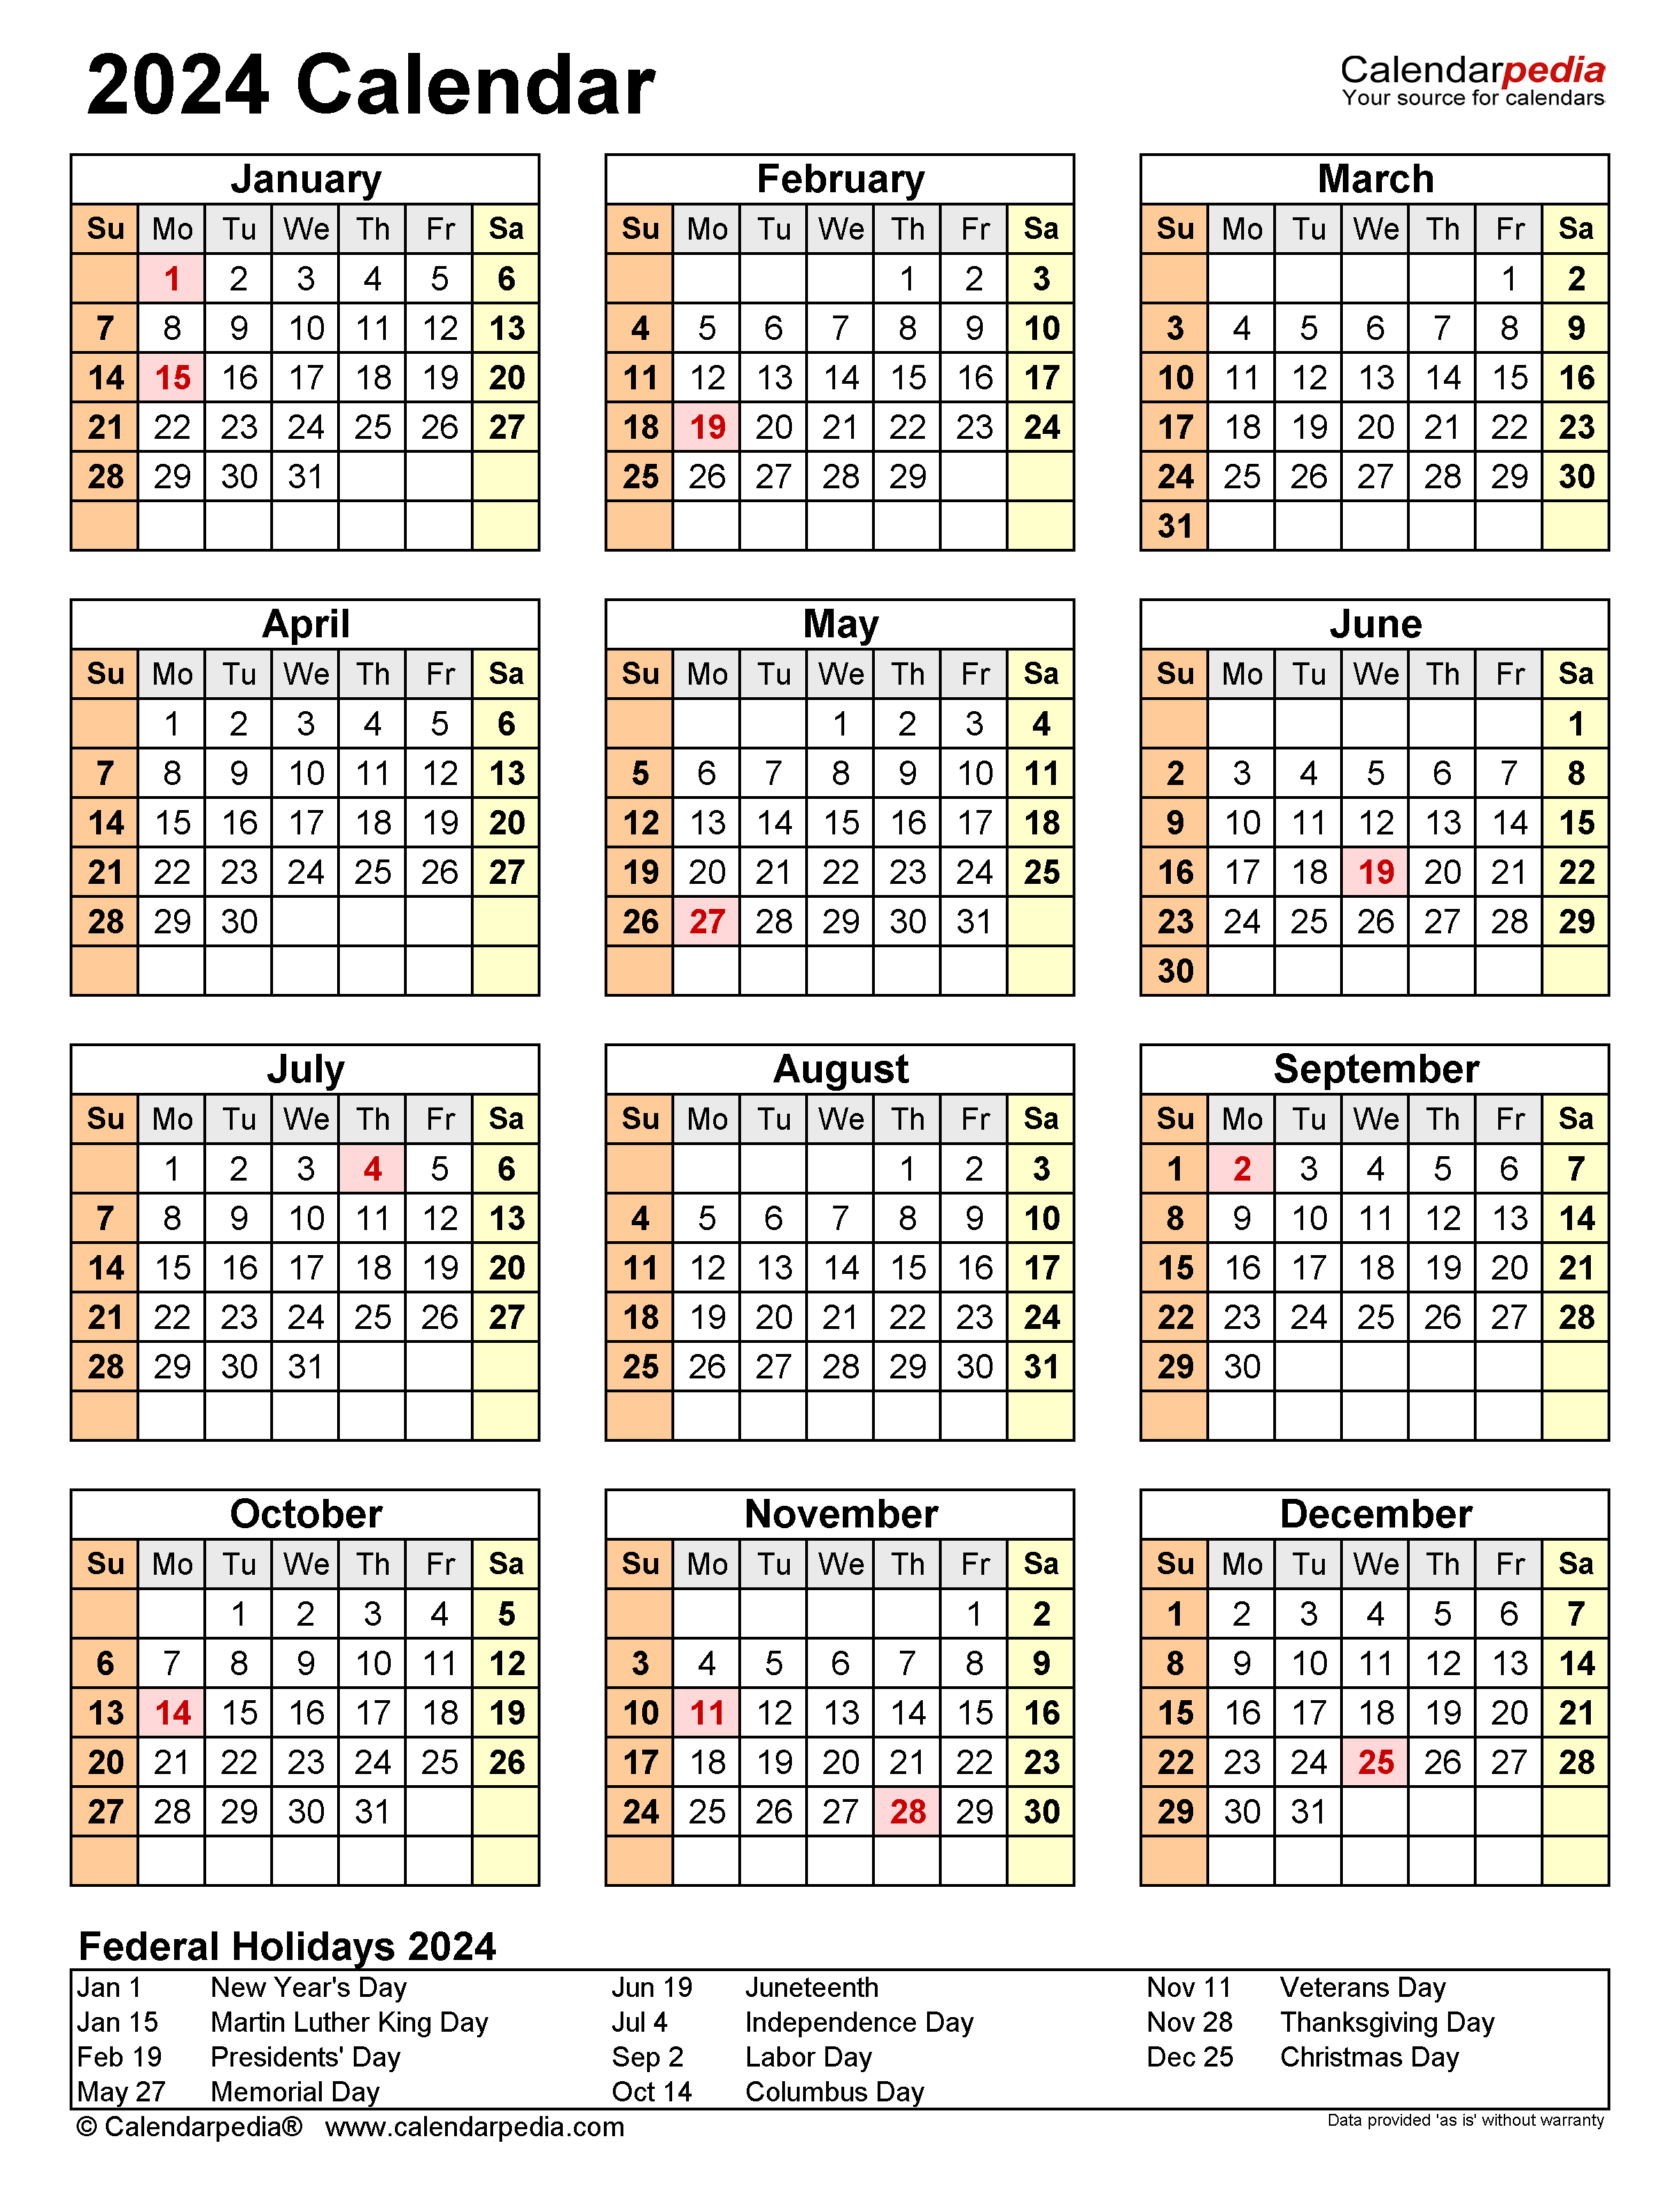 Free Printable 2024 Calendar With Holidays Crownflourmills - Free Printable 2024 Calendar With Holidays Punjab